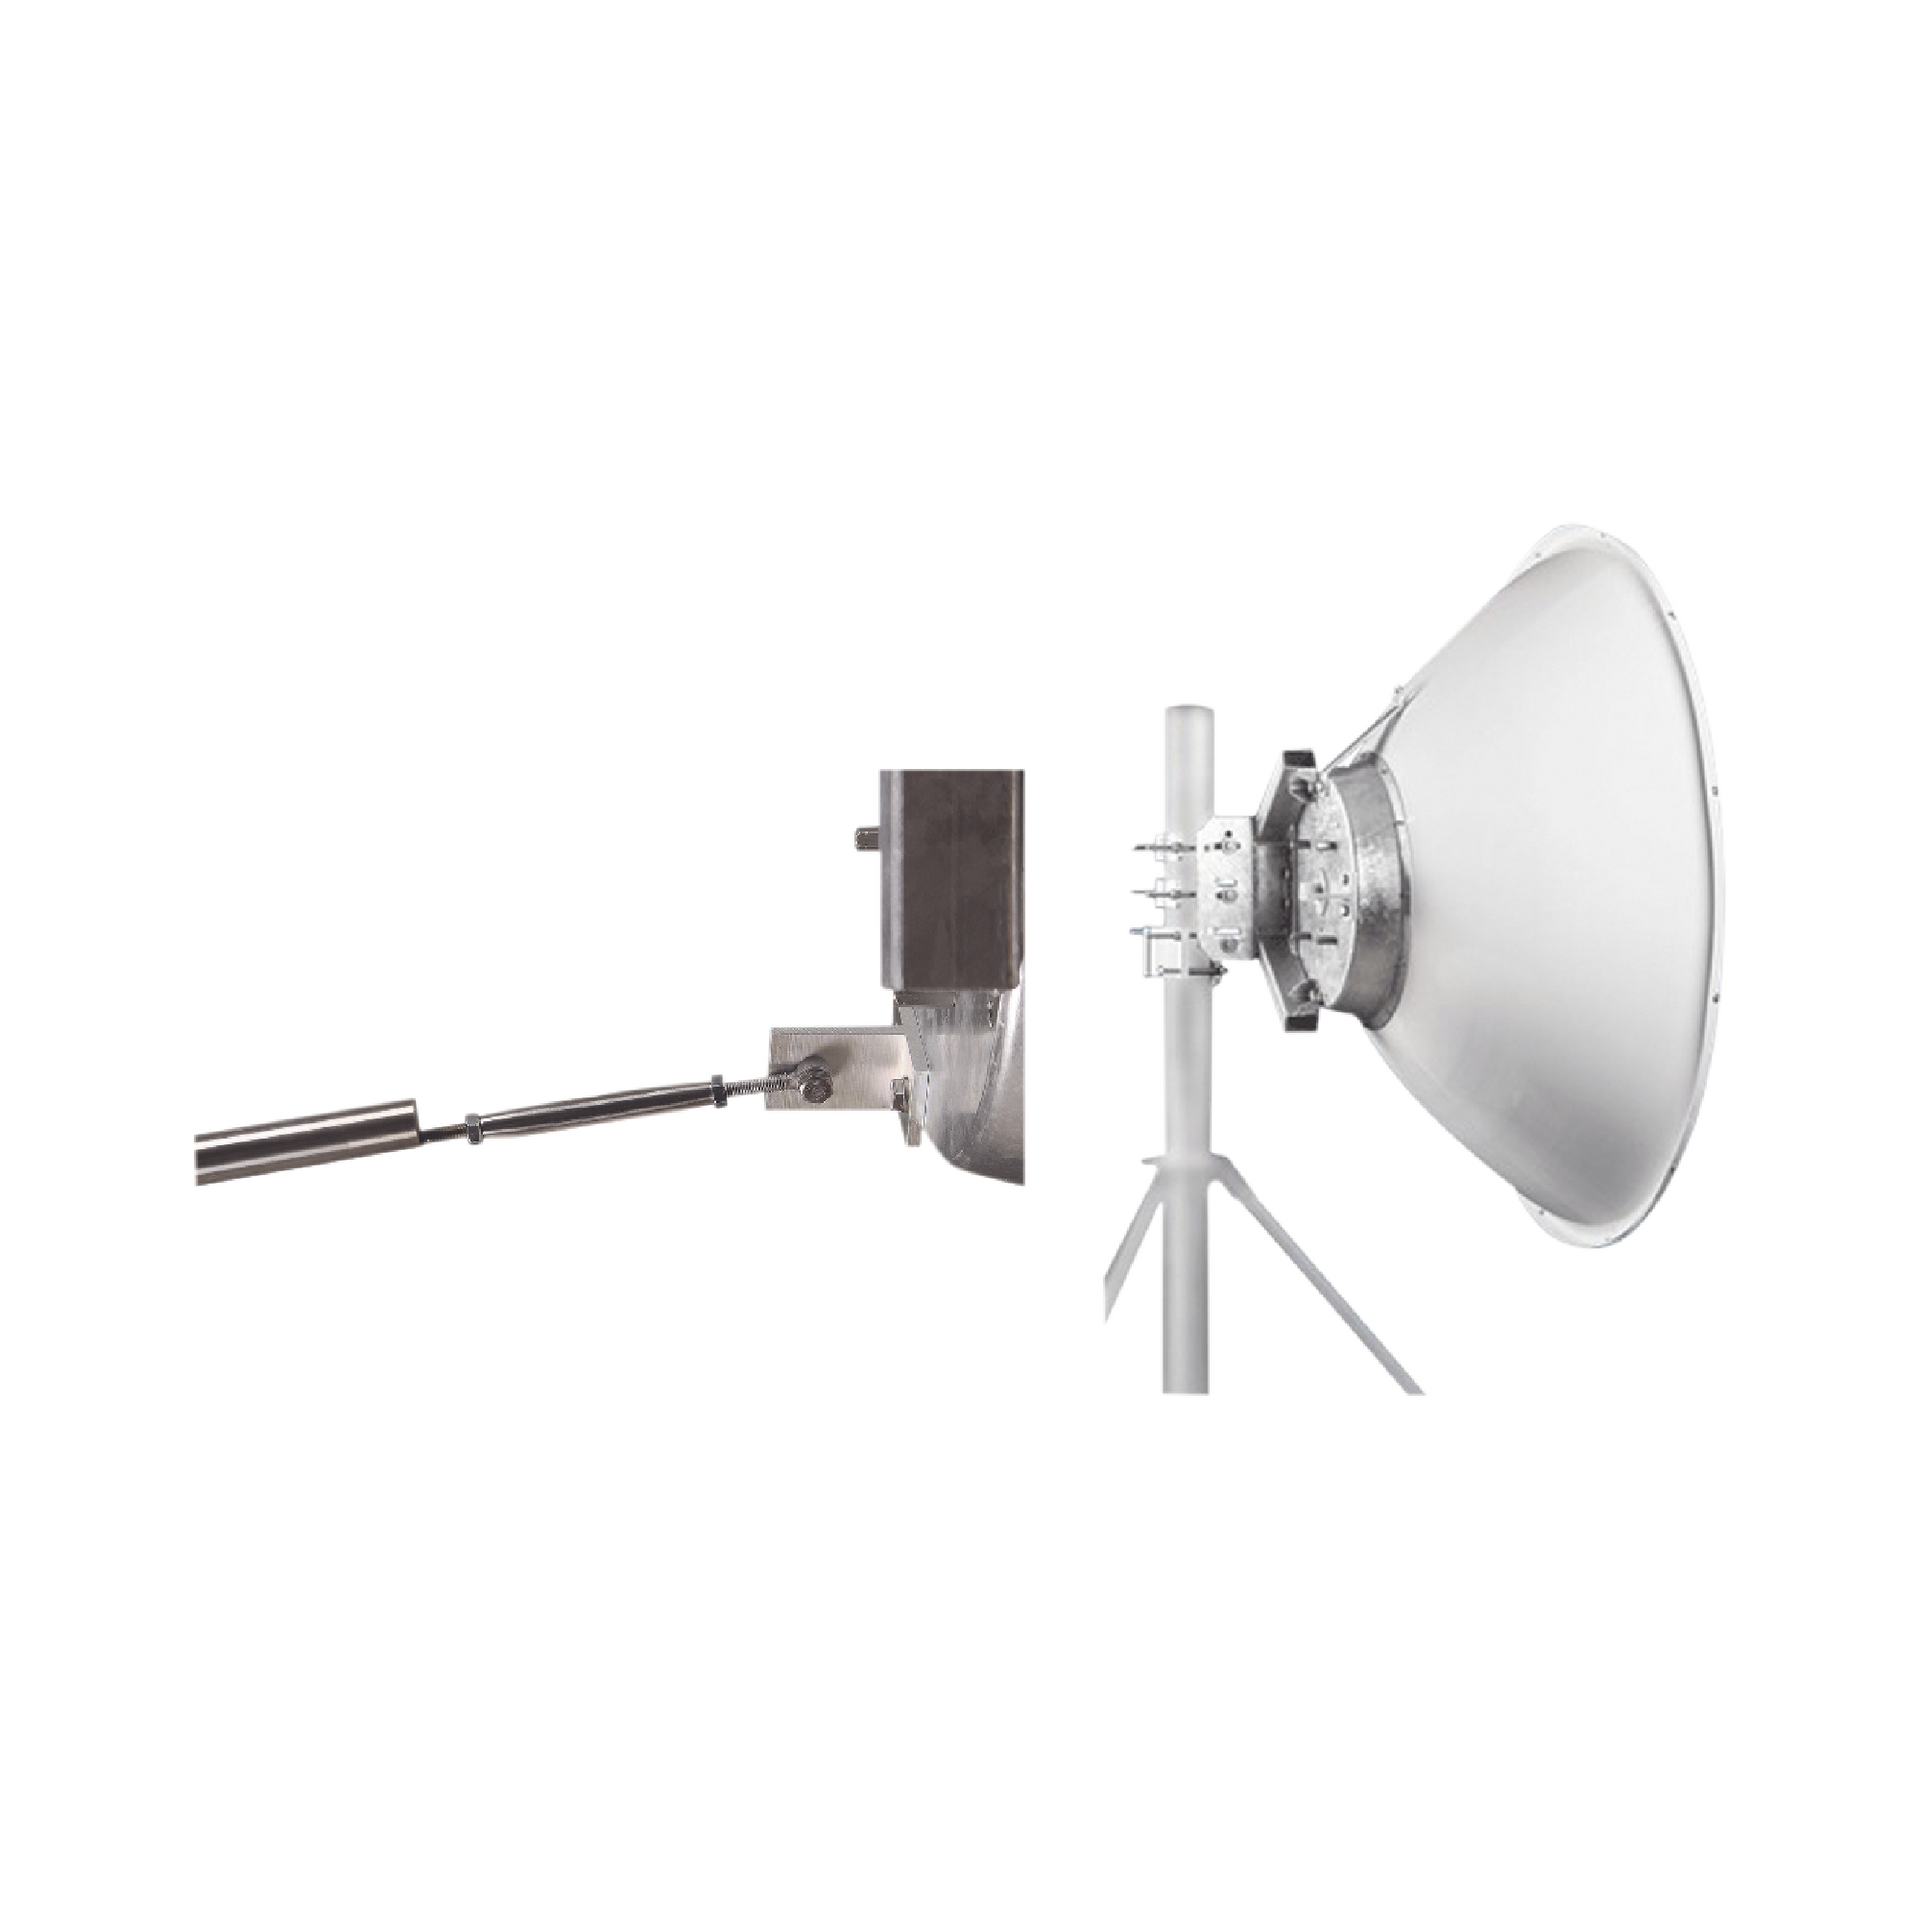 Antena parabólica 4 ft para radio B11, ganancia de 41 dBi, conector guía de  onda, 10.1-12 GHz